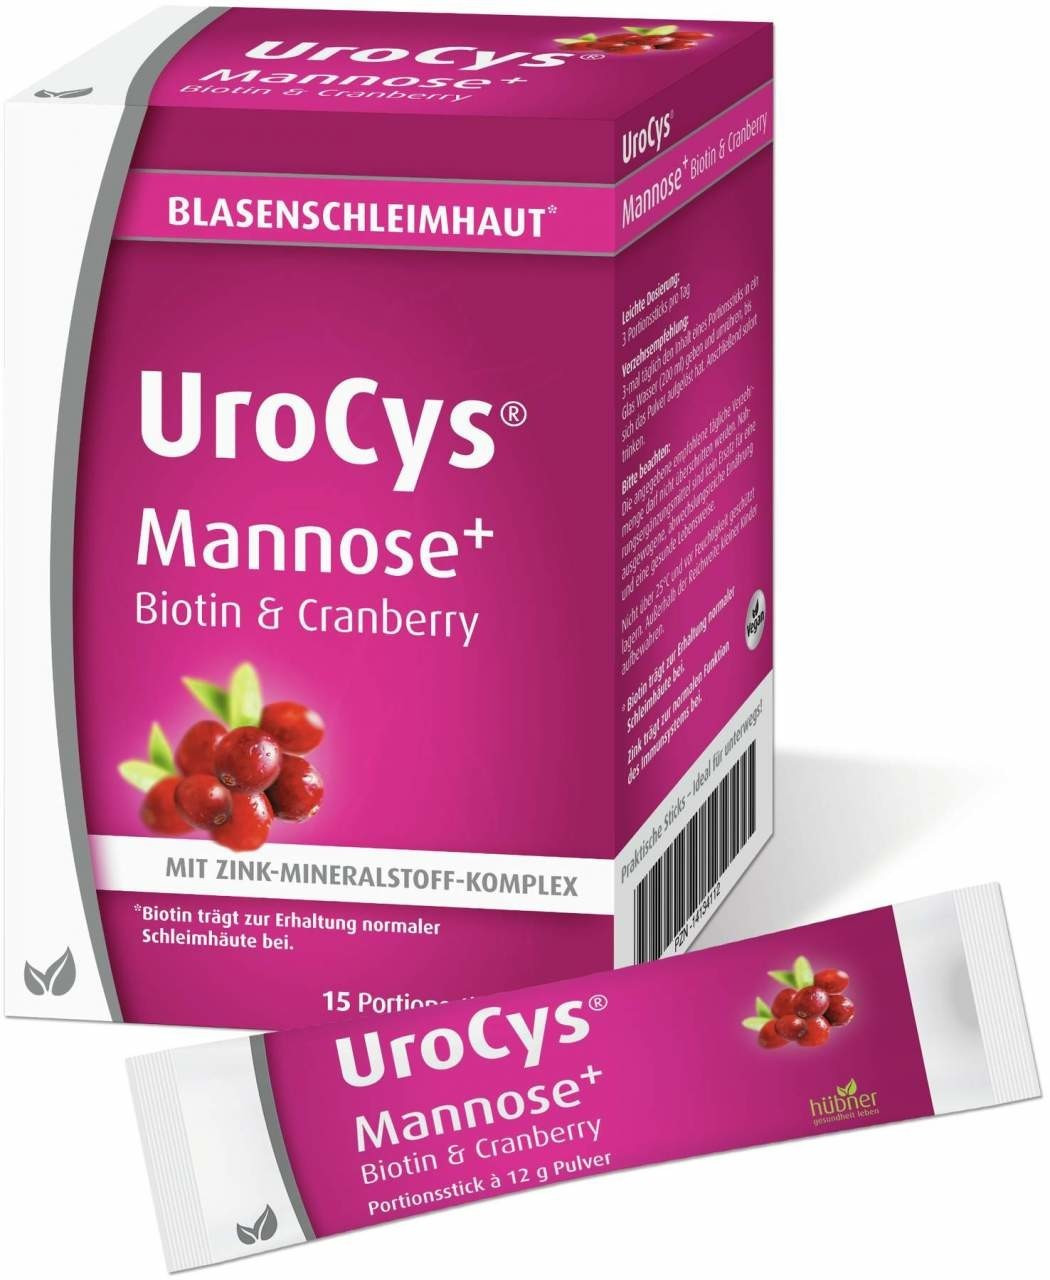 Hübner UroCys Mannose+ Biotin & Cranberry Sticks (15 Stk.) ab 13,39 €